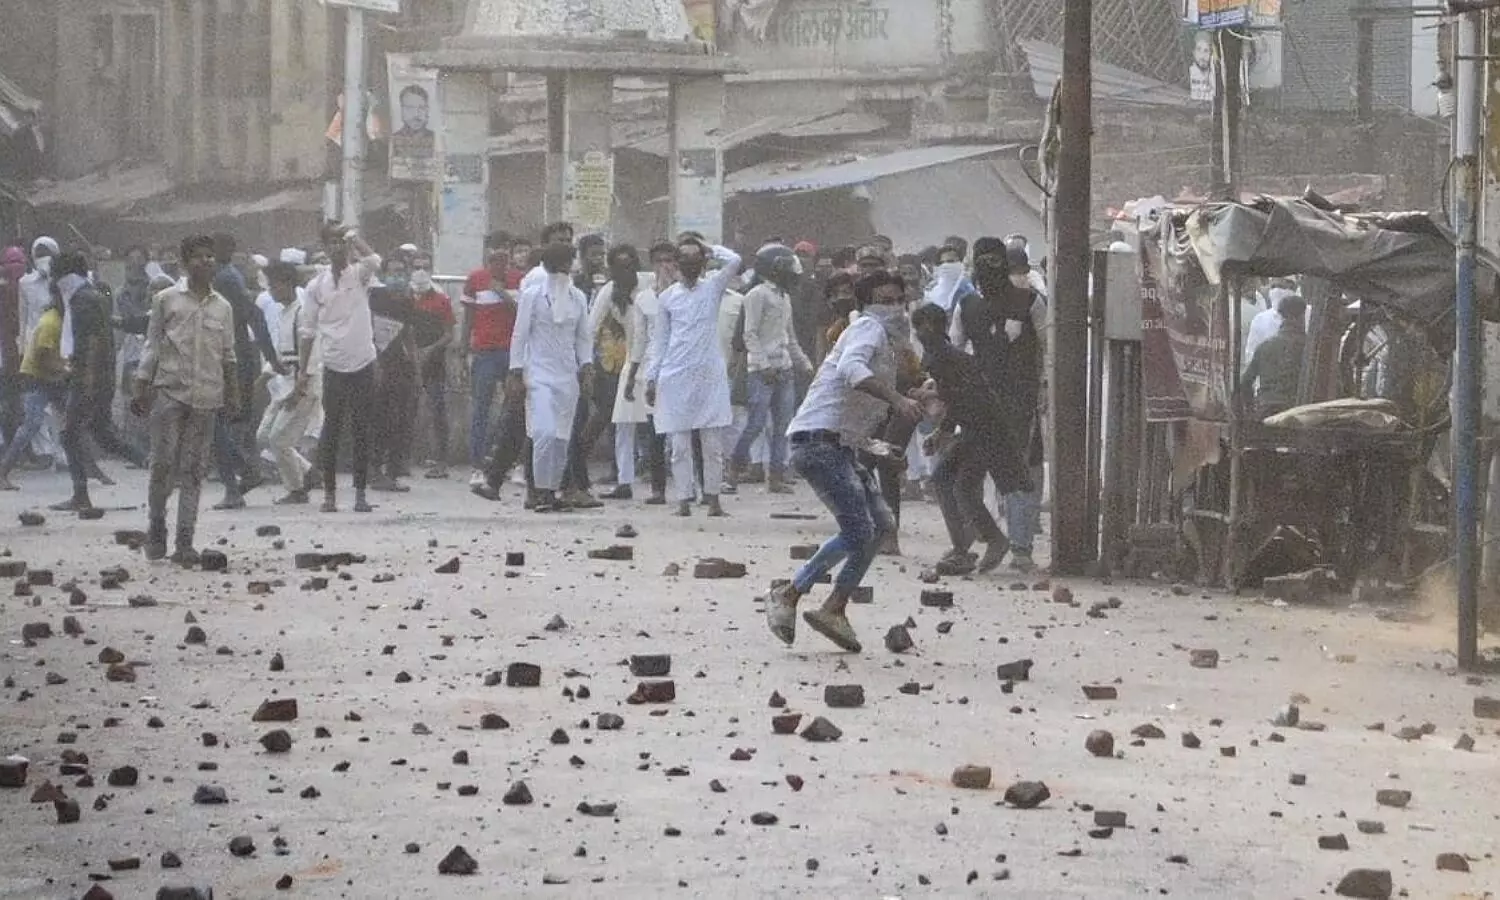 Kanpur Violence latest news